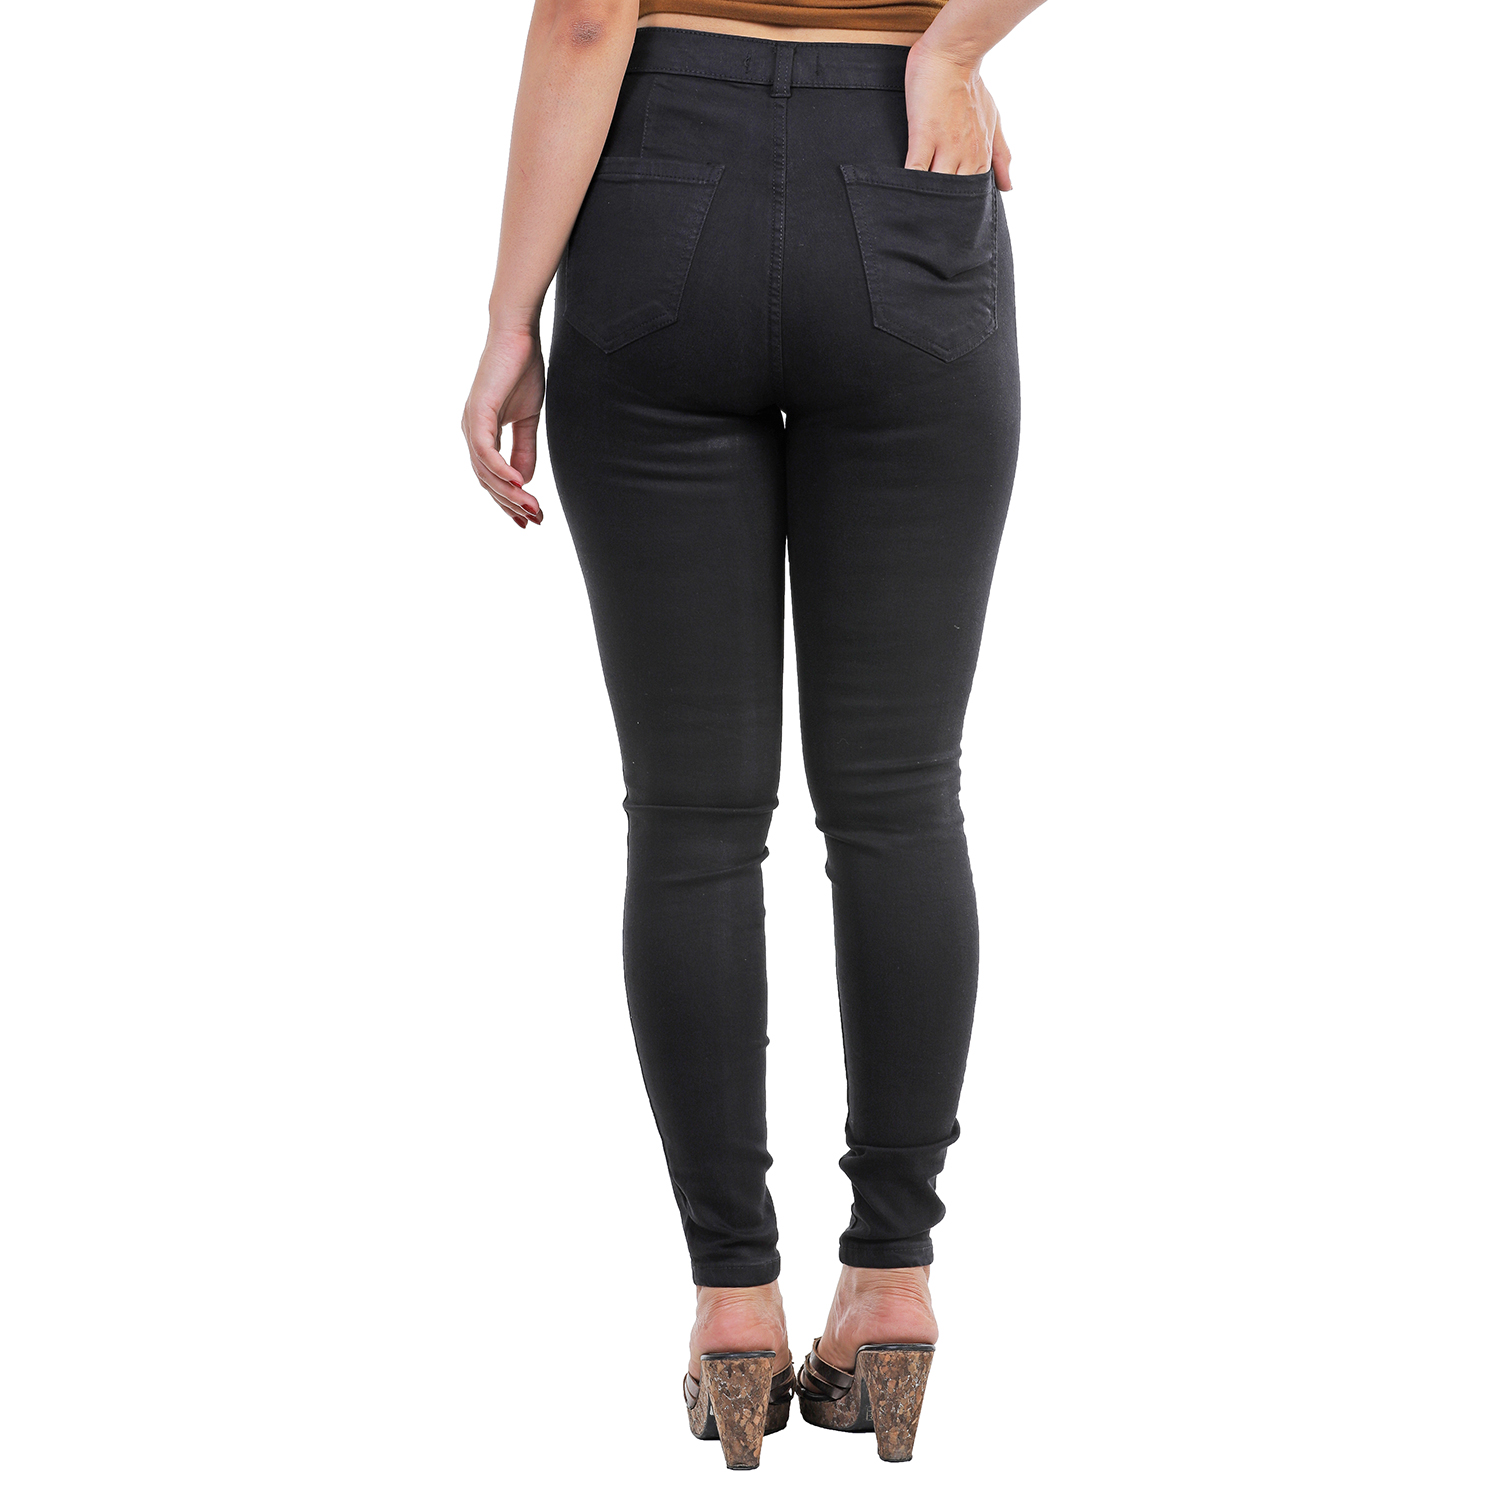 Buy Malachi Denim Lycra jeans For Women And Girls - Black Online @ ₹699 ...